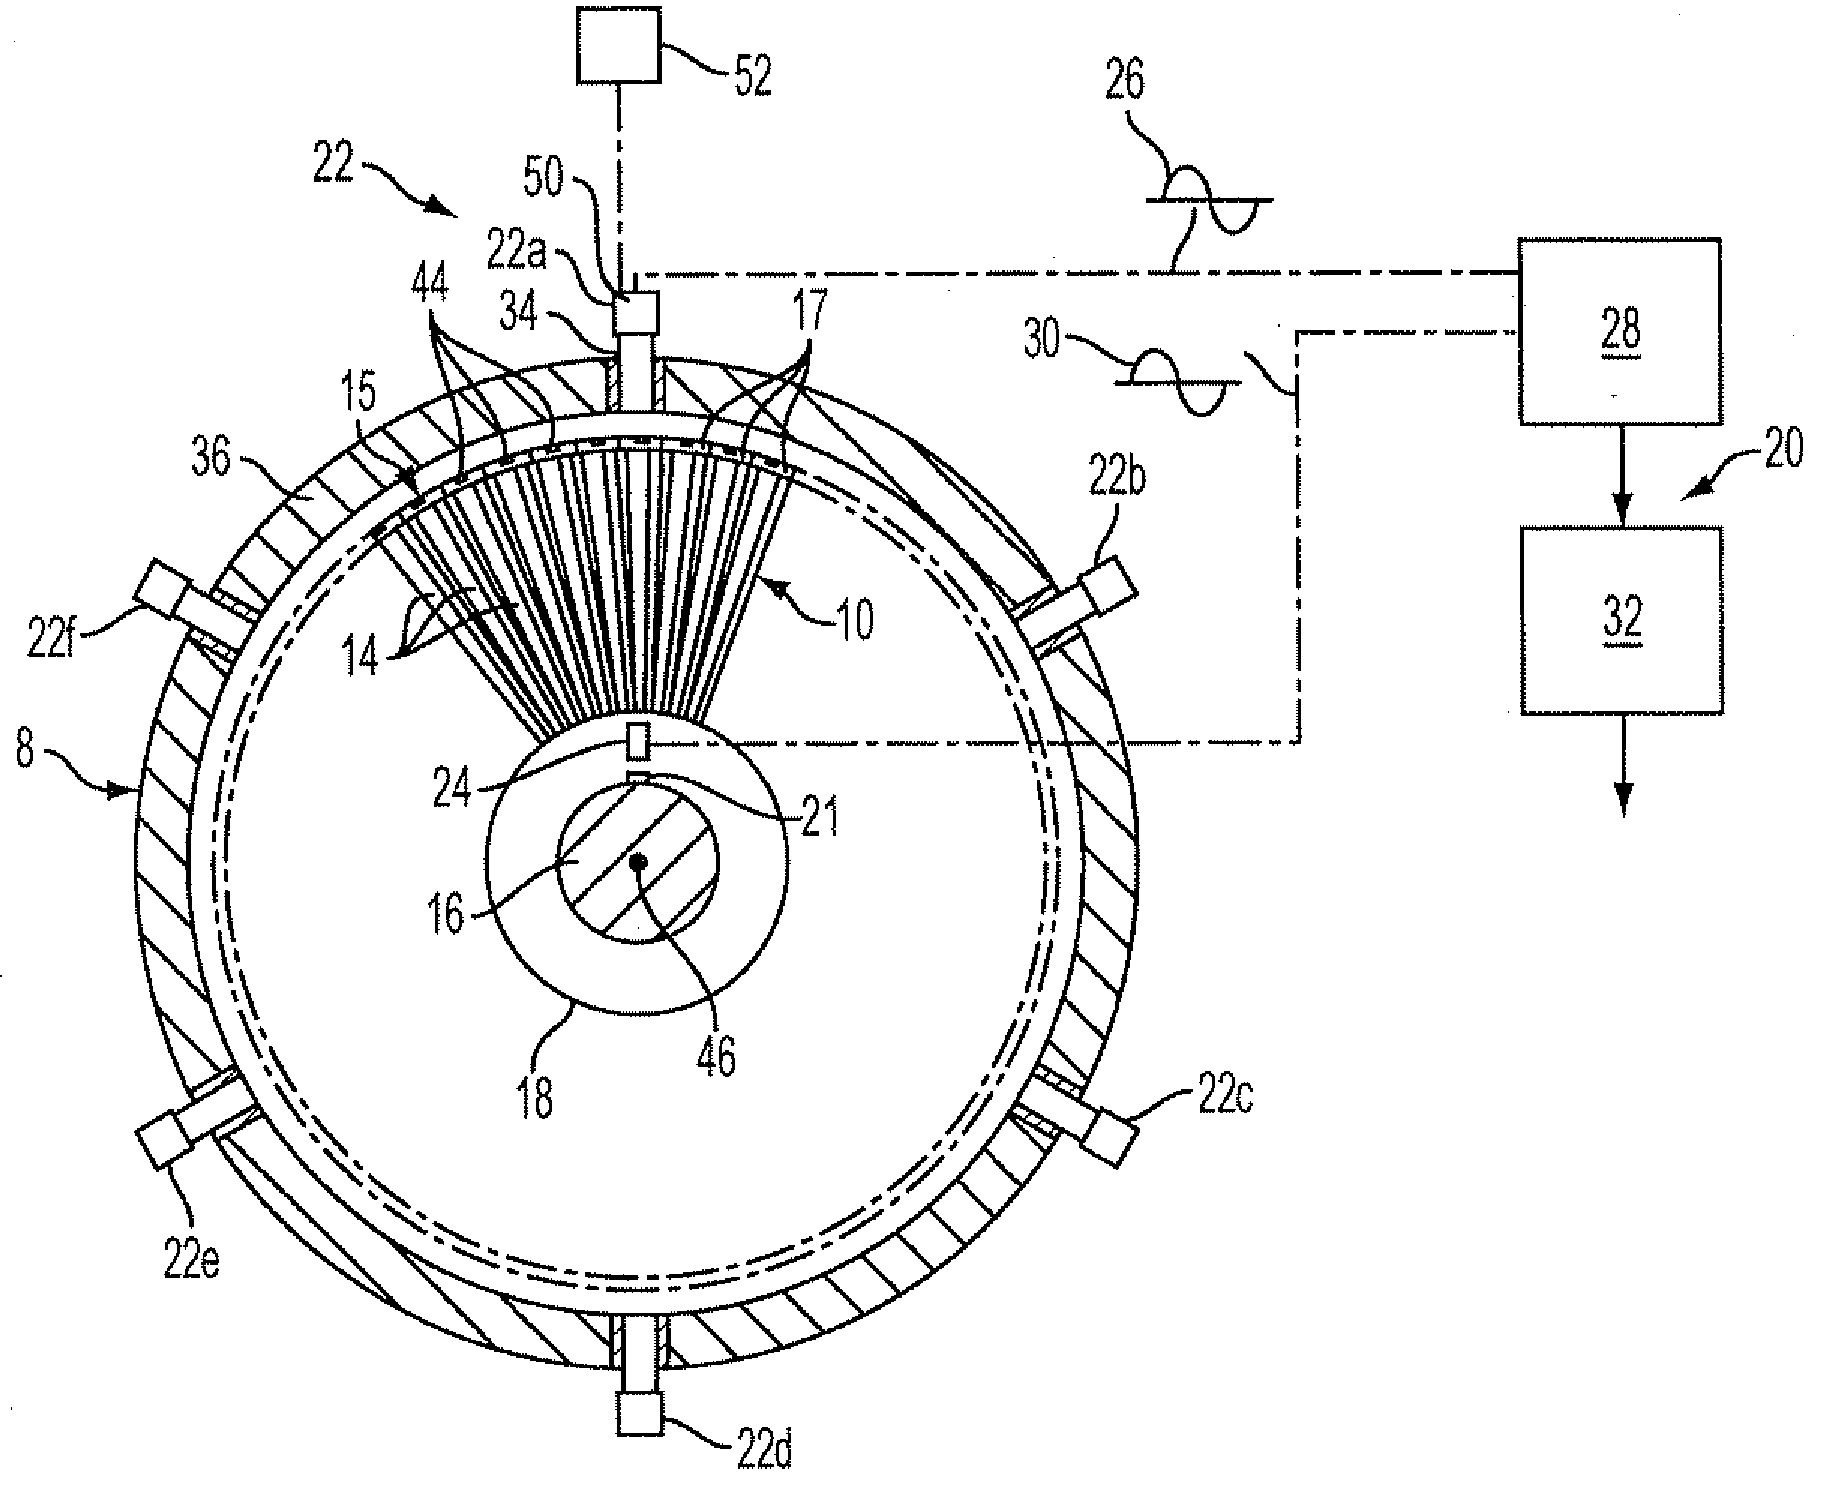 Method of Matching Sensors in a Multi-Probe Turbine Blade Vibration Monitor